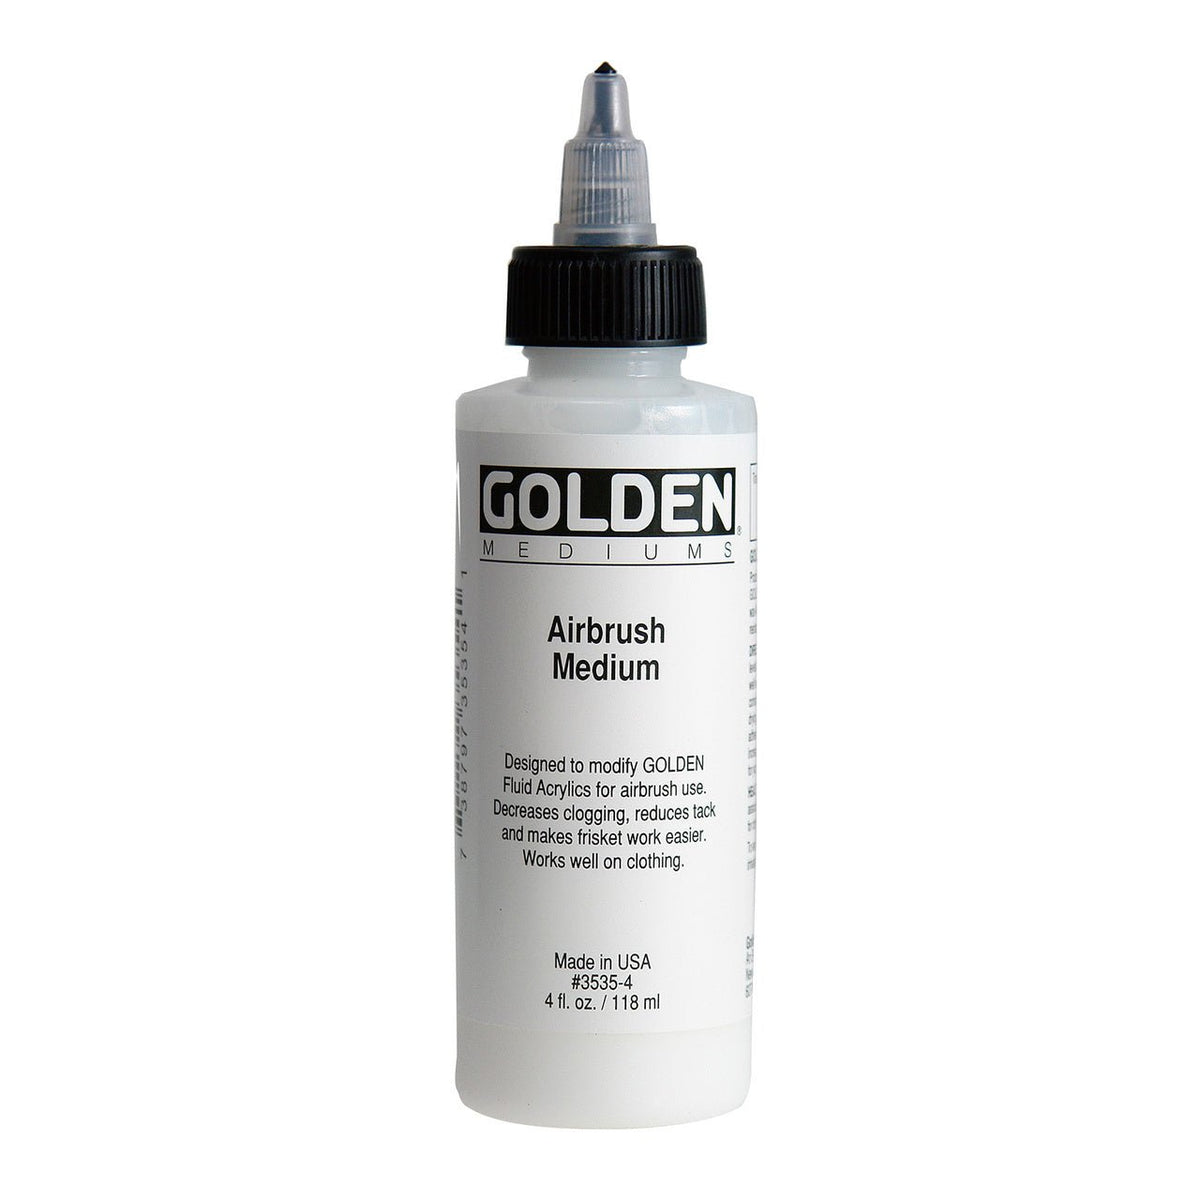 Golden Airbrush Medium Full Review 